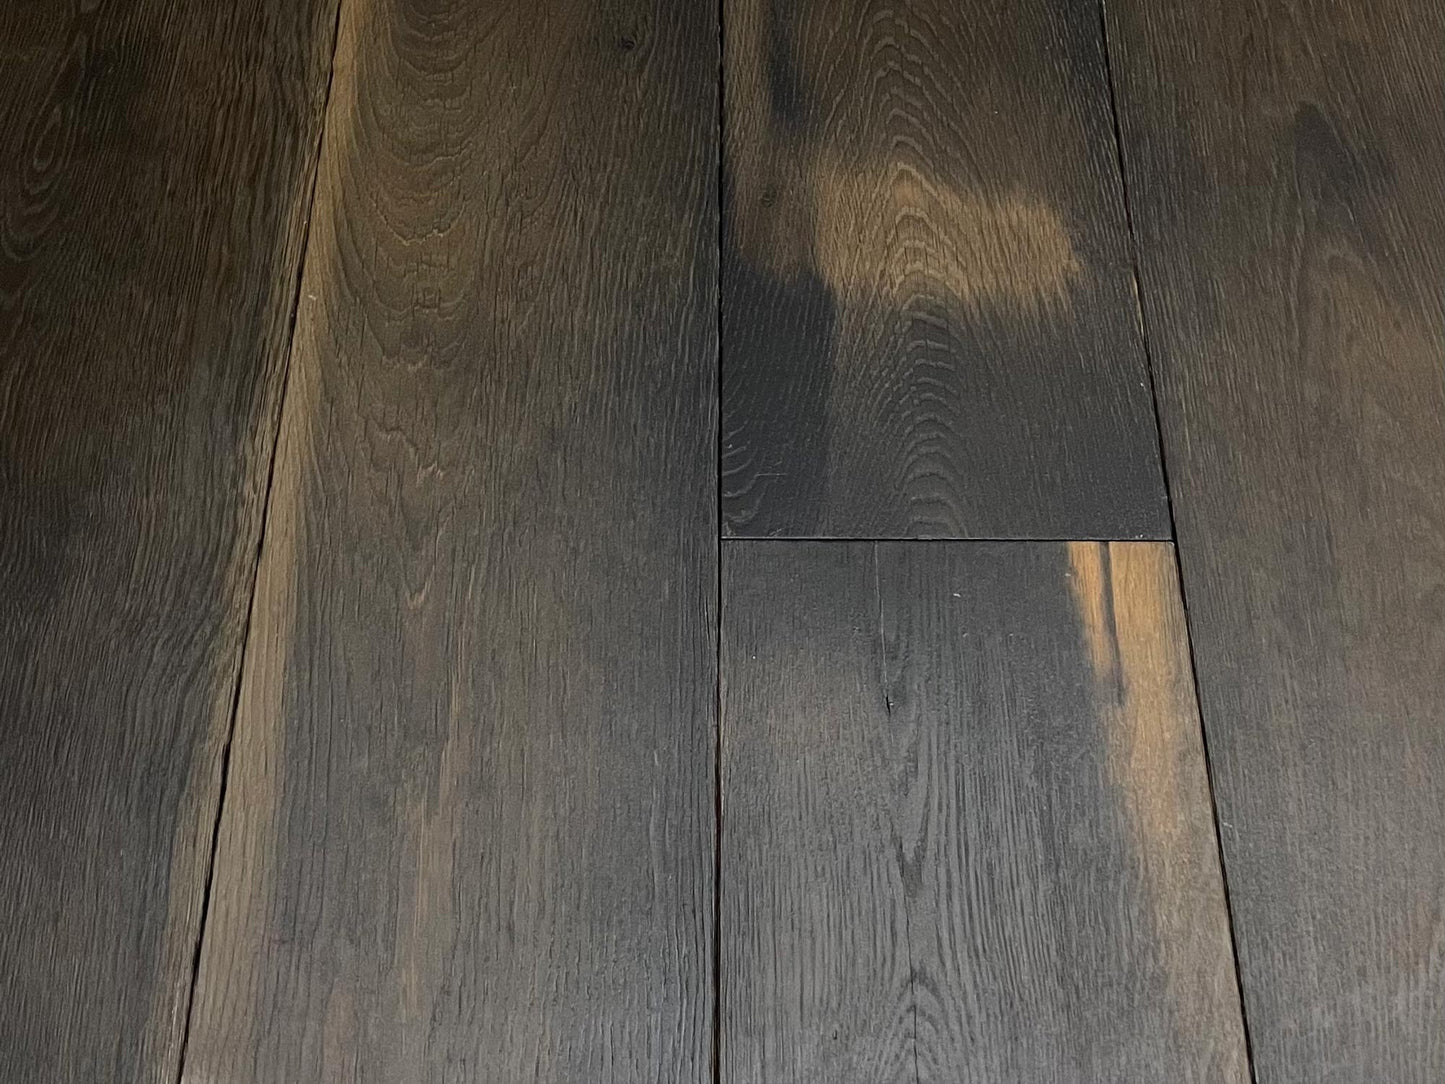 Antique Tobacco Oak Flooring | Engineered Oak Wood Floor